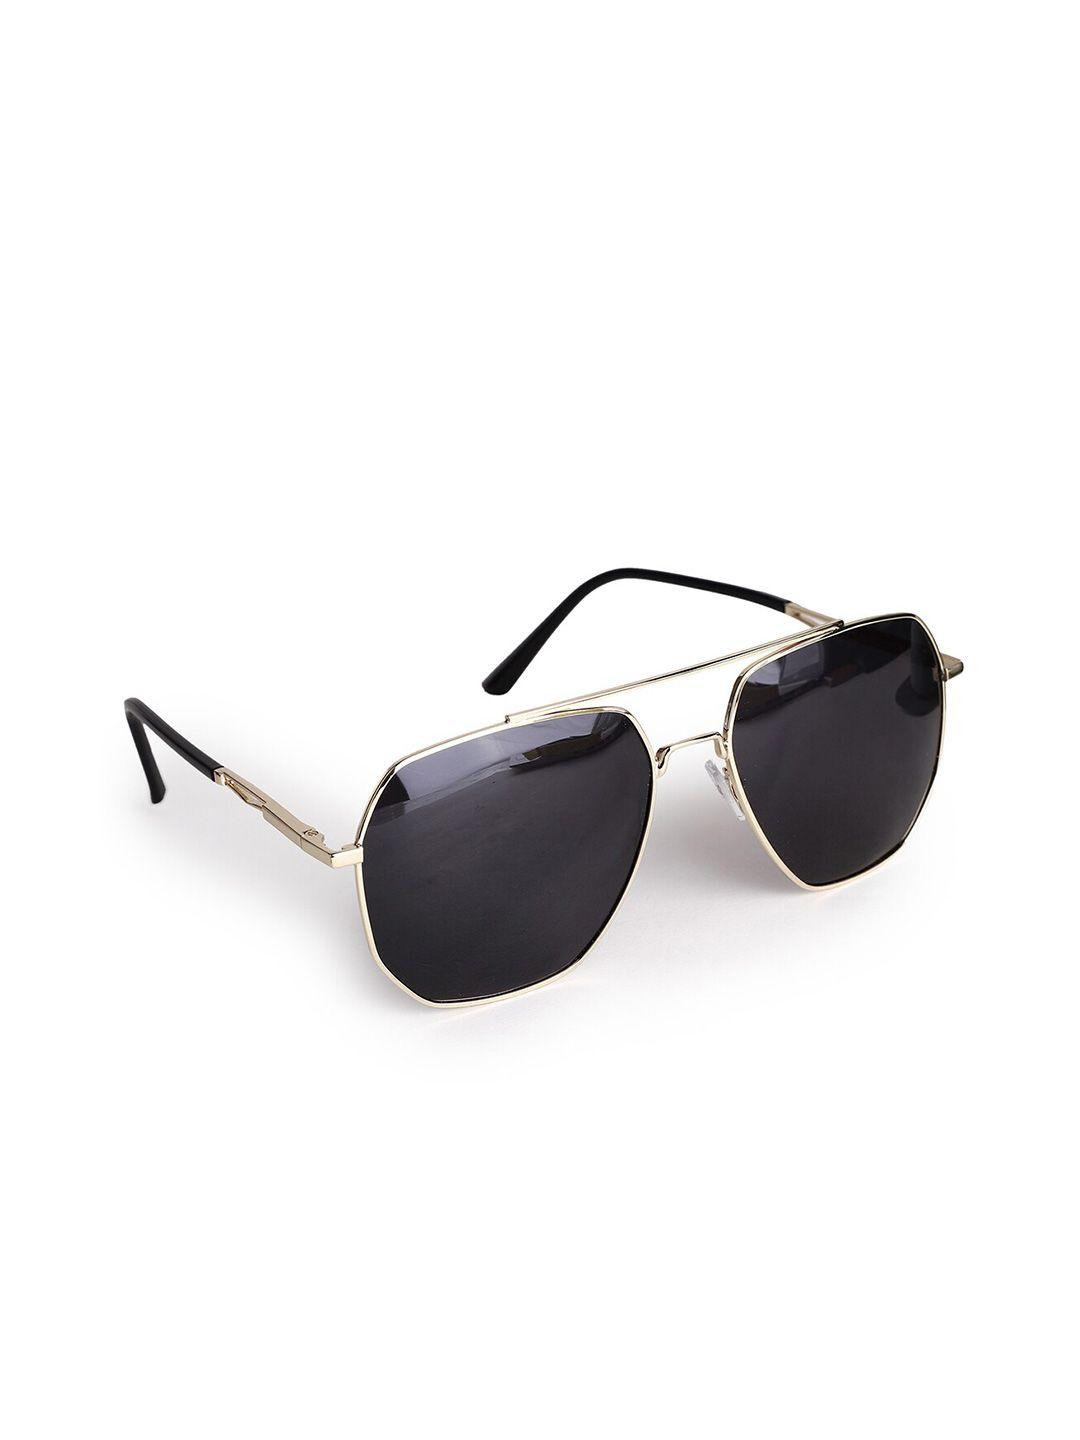 hashburys unisex black lens & gold-toned aviator sunglasses with uv protected lens